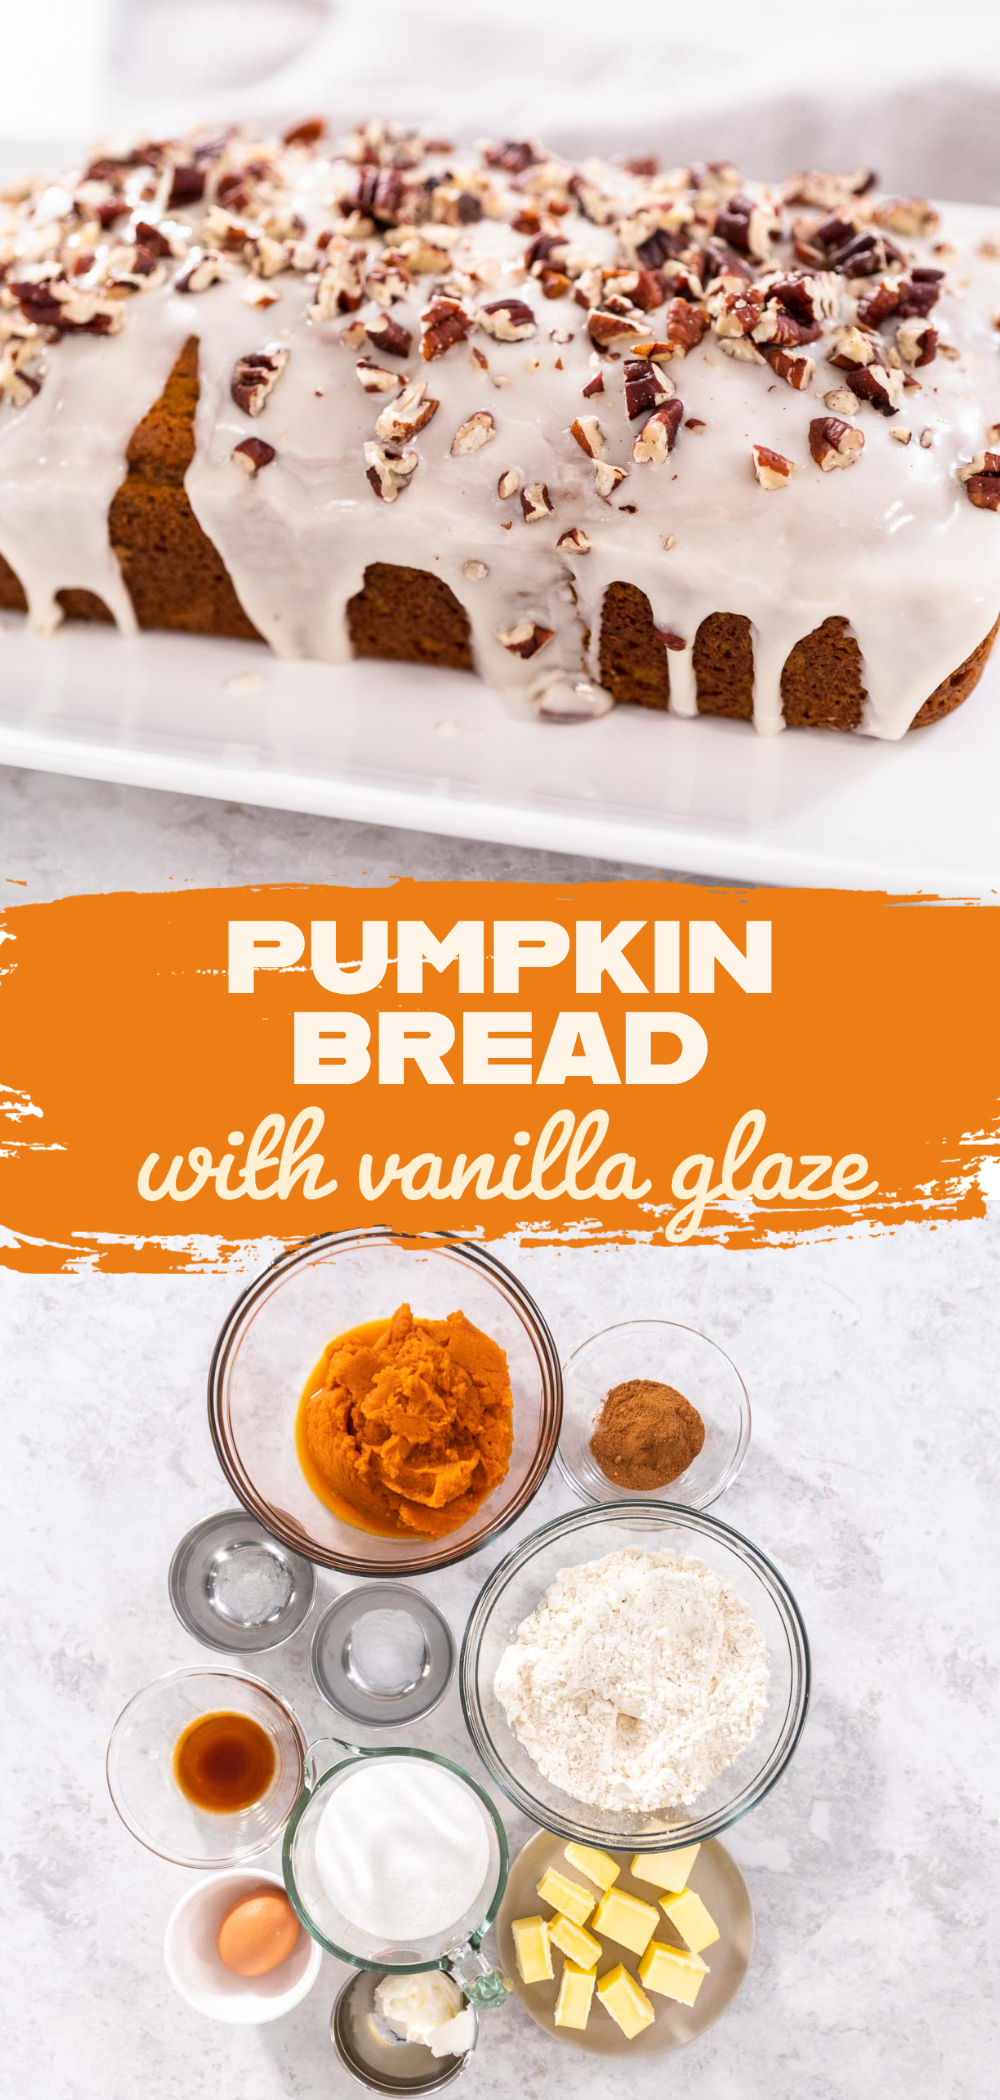 Pumpkin bread with vanilla glaze and pecans